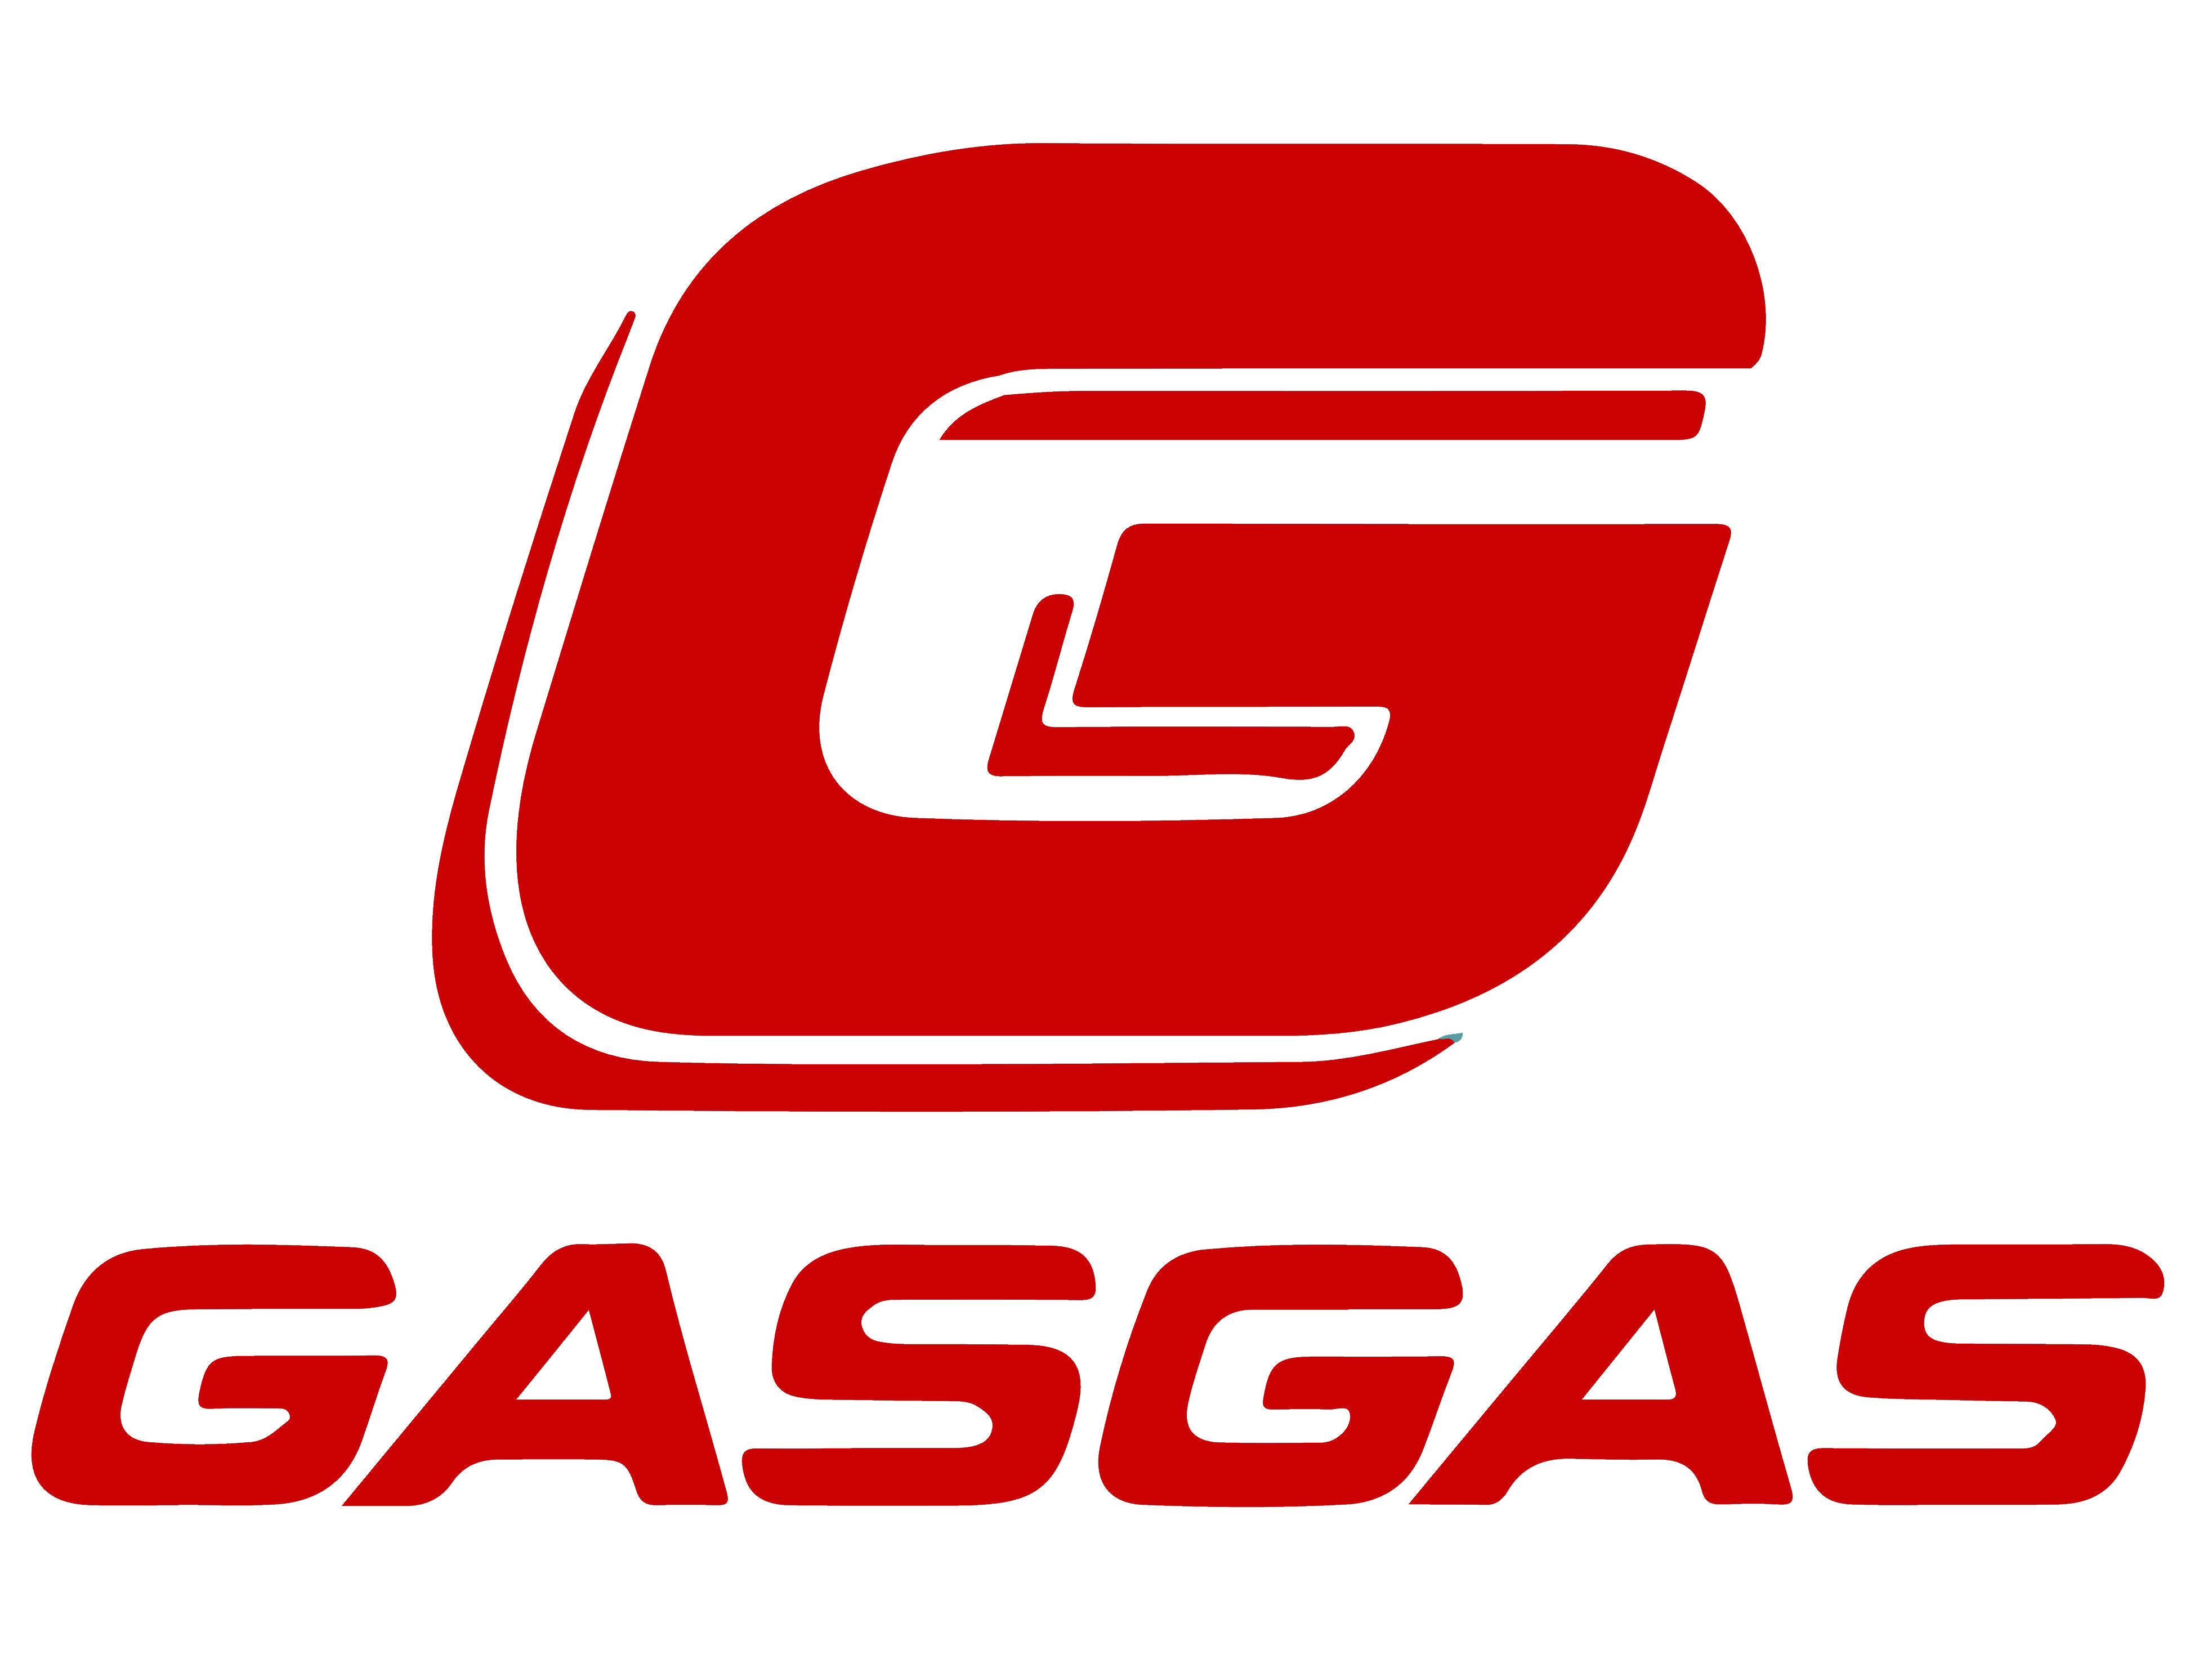 GASGAS (Gas Gas) logo, logotype